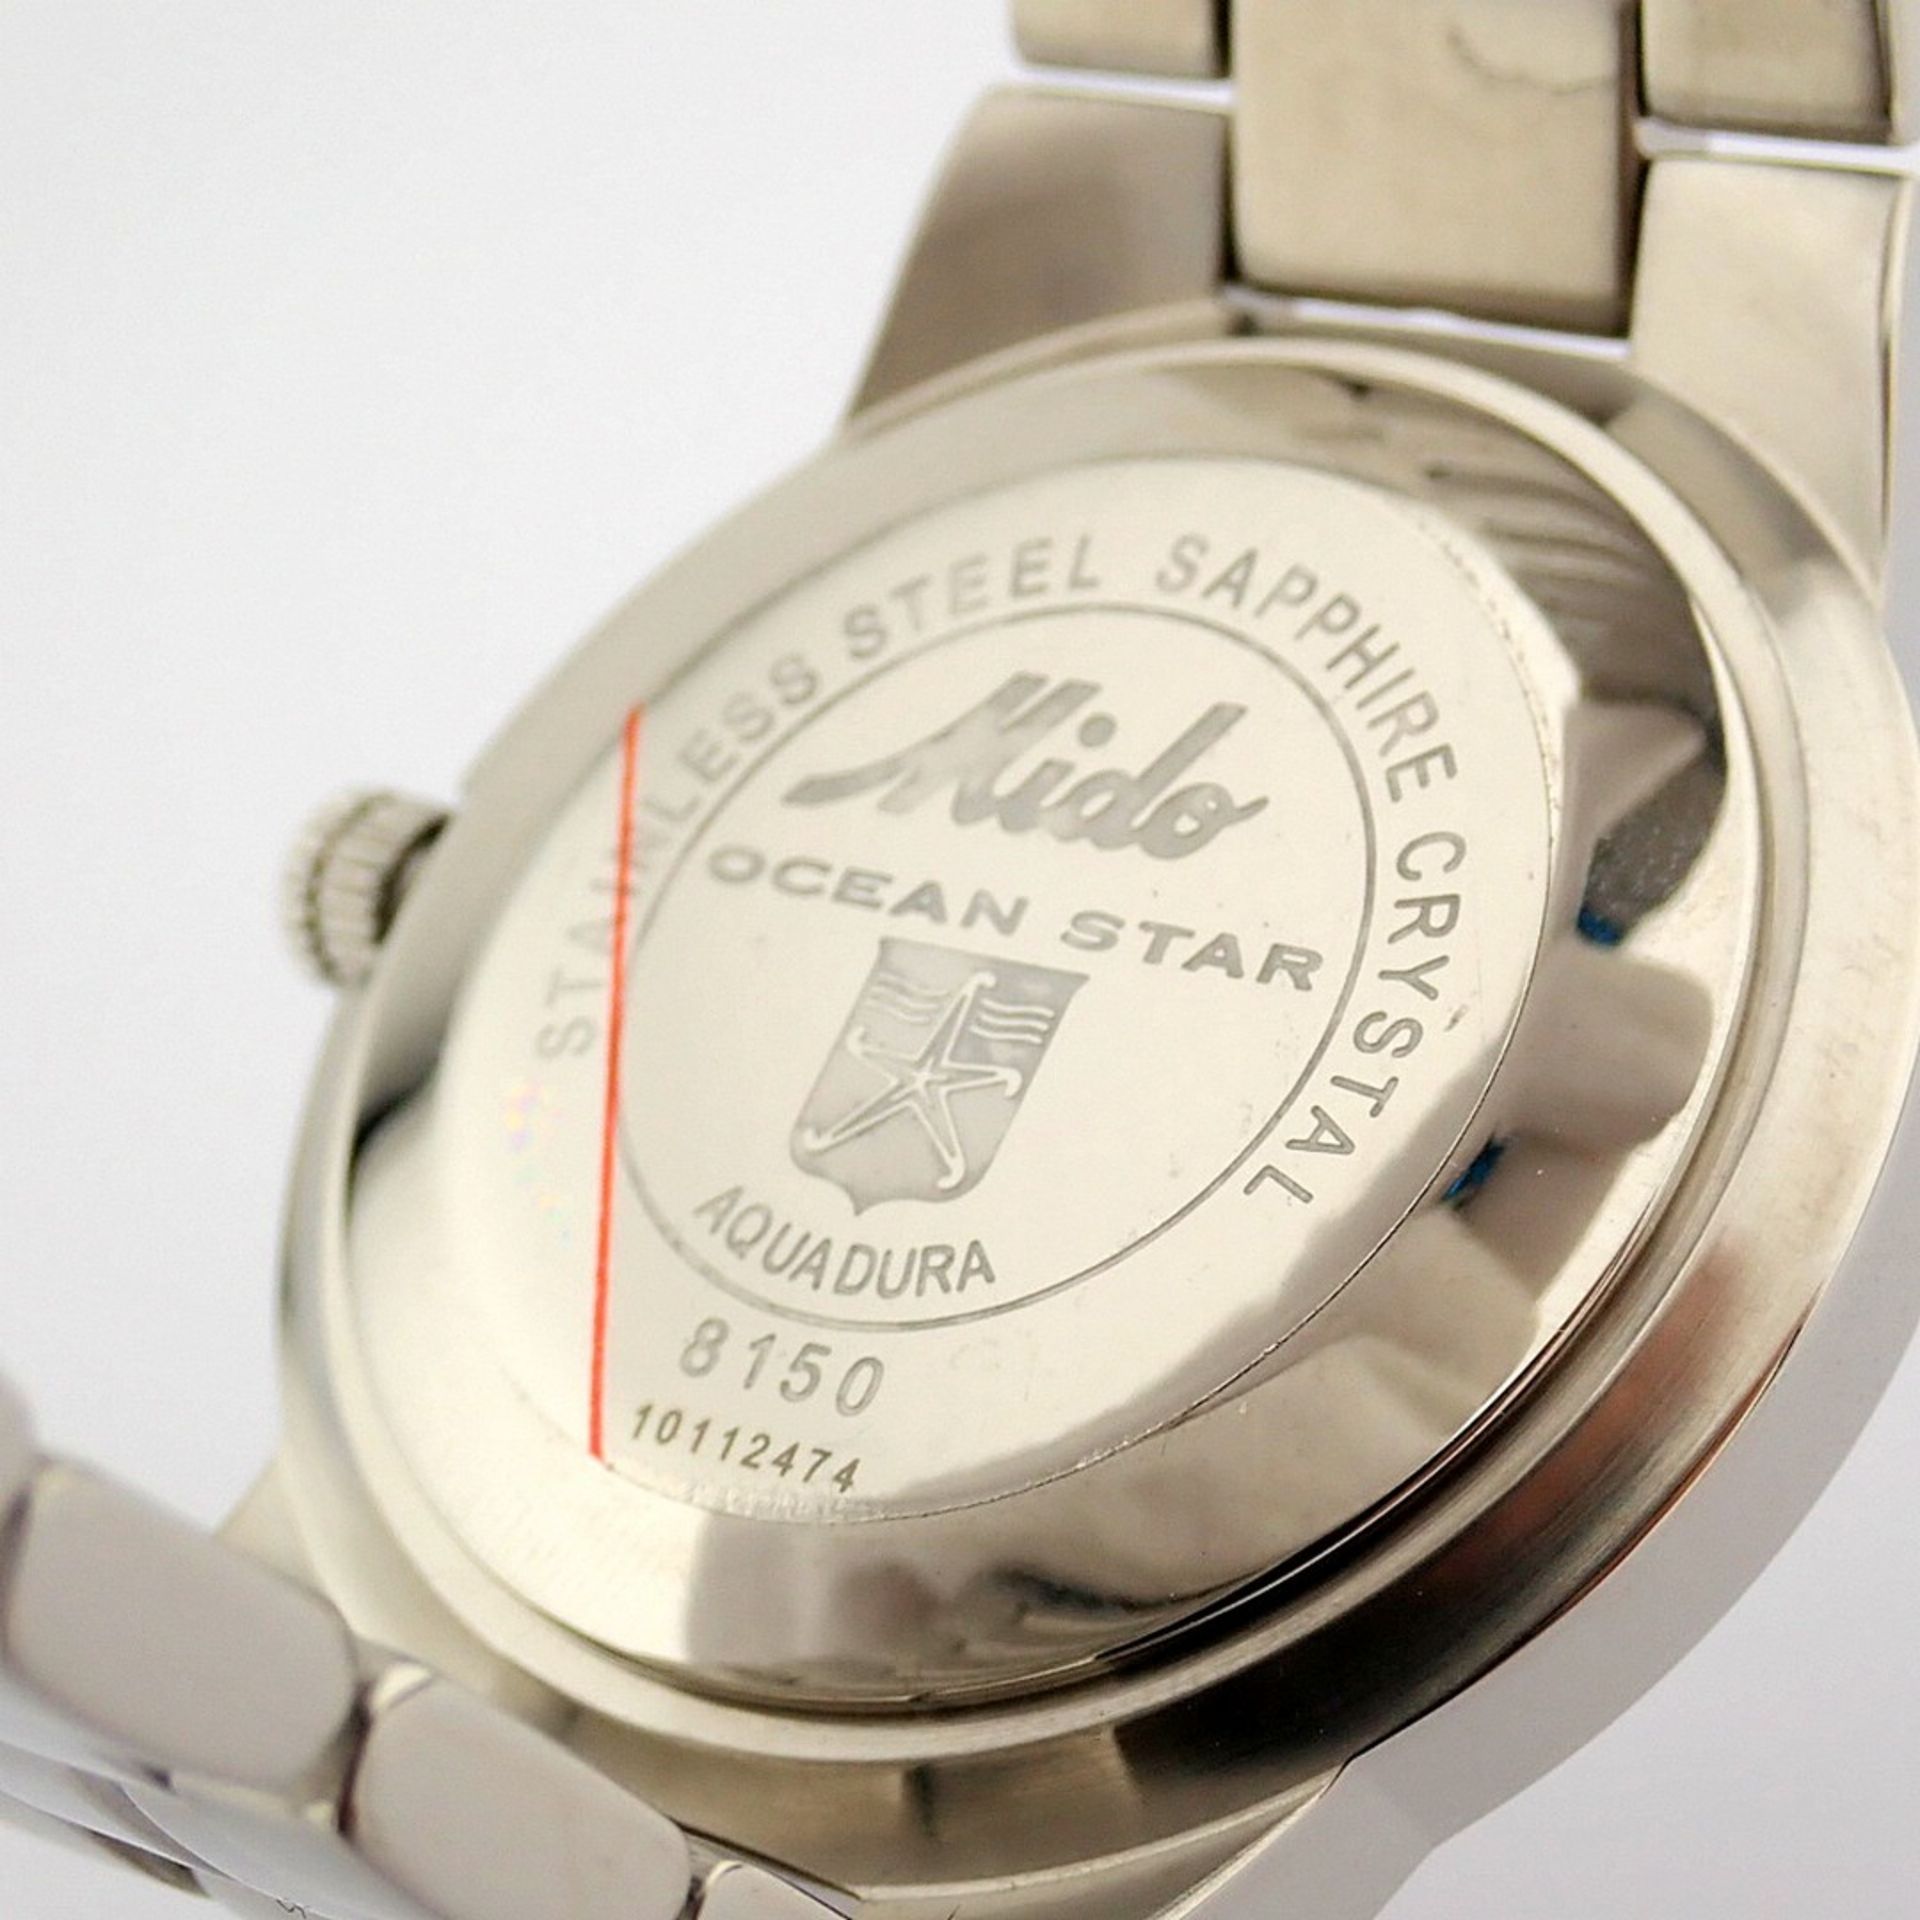 Mido / Ocean Star Aquadura (Brand new) - Gentlmen's Steel Wrist Watch - Image 11 of 12